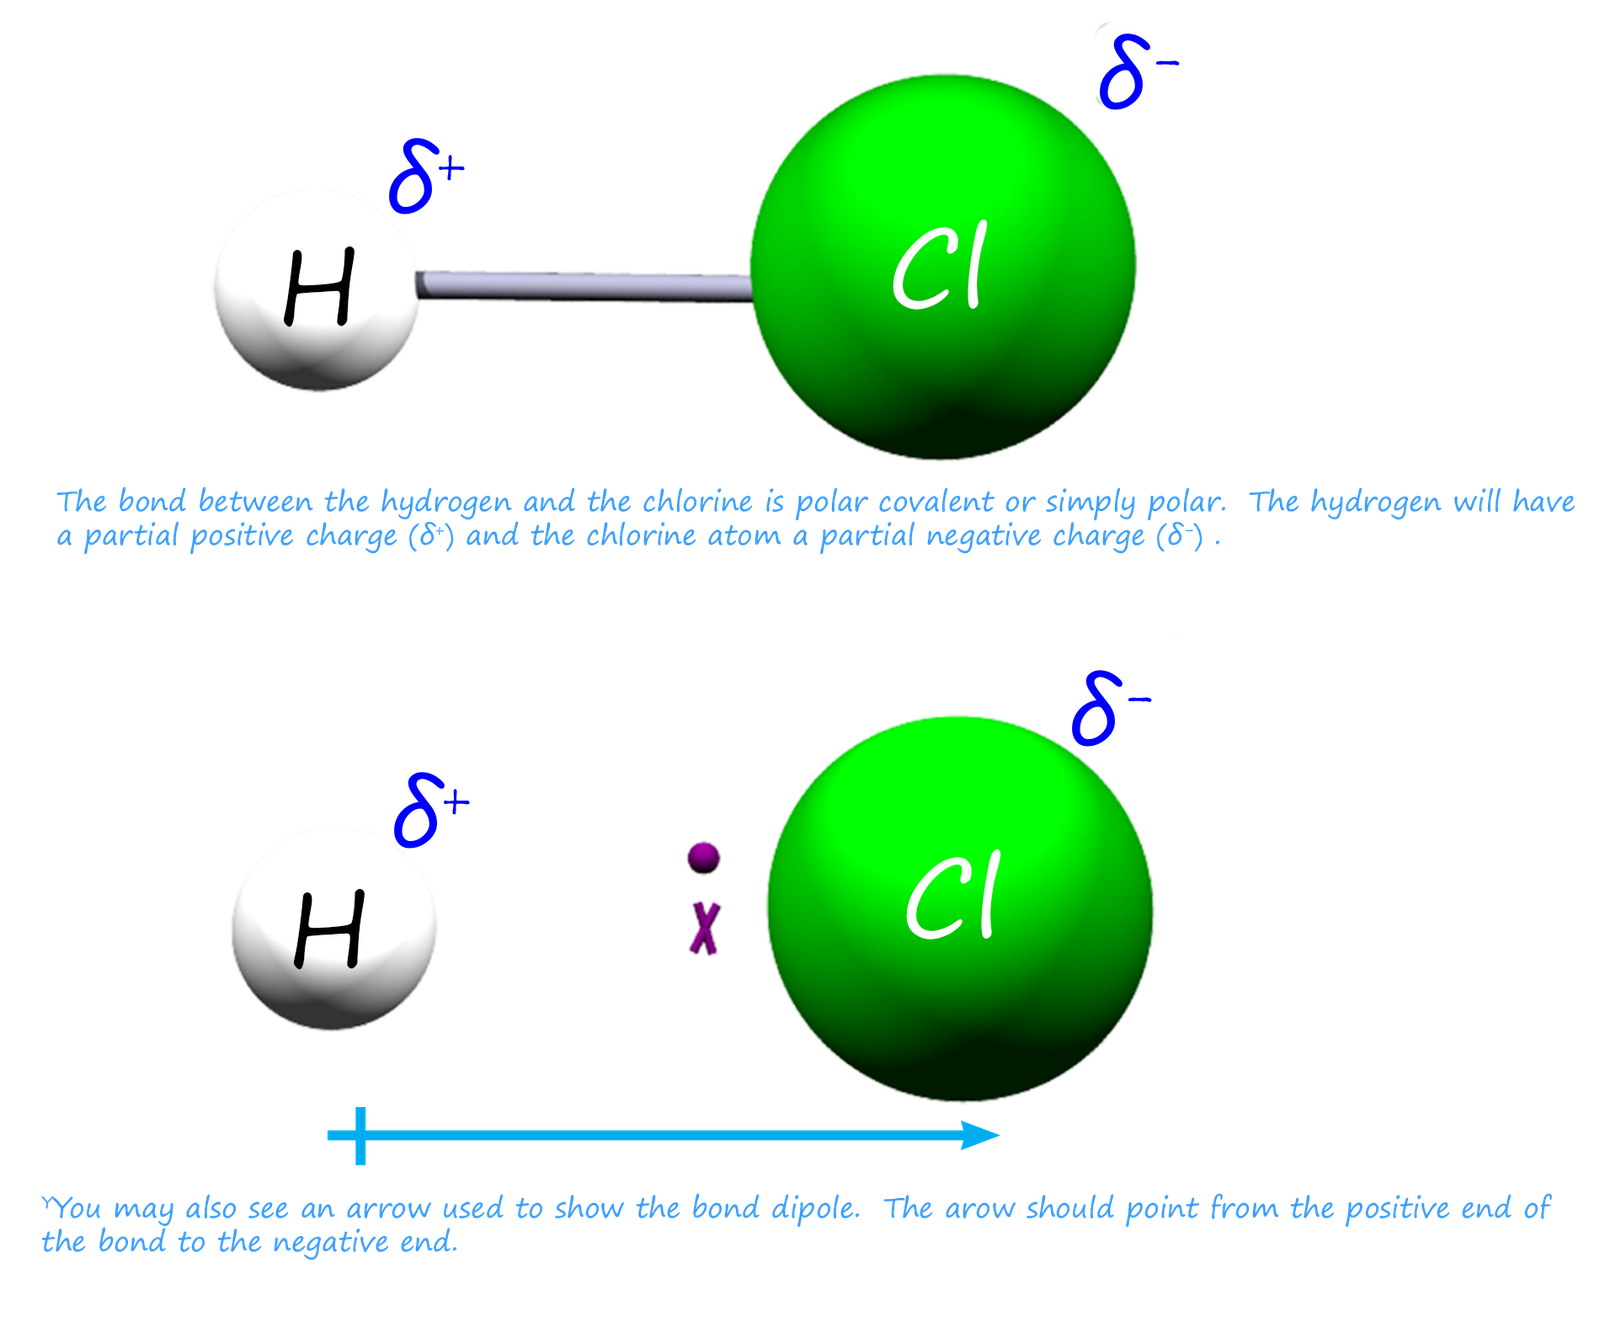 3d model showing polar covalent bonding in a molecule of hydrogen chloride (HCl)